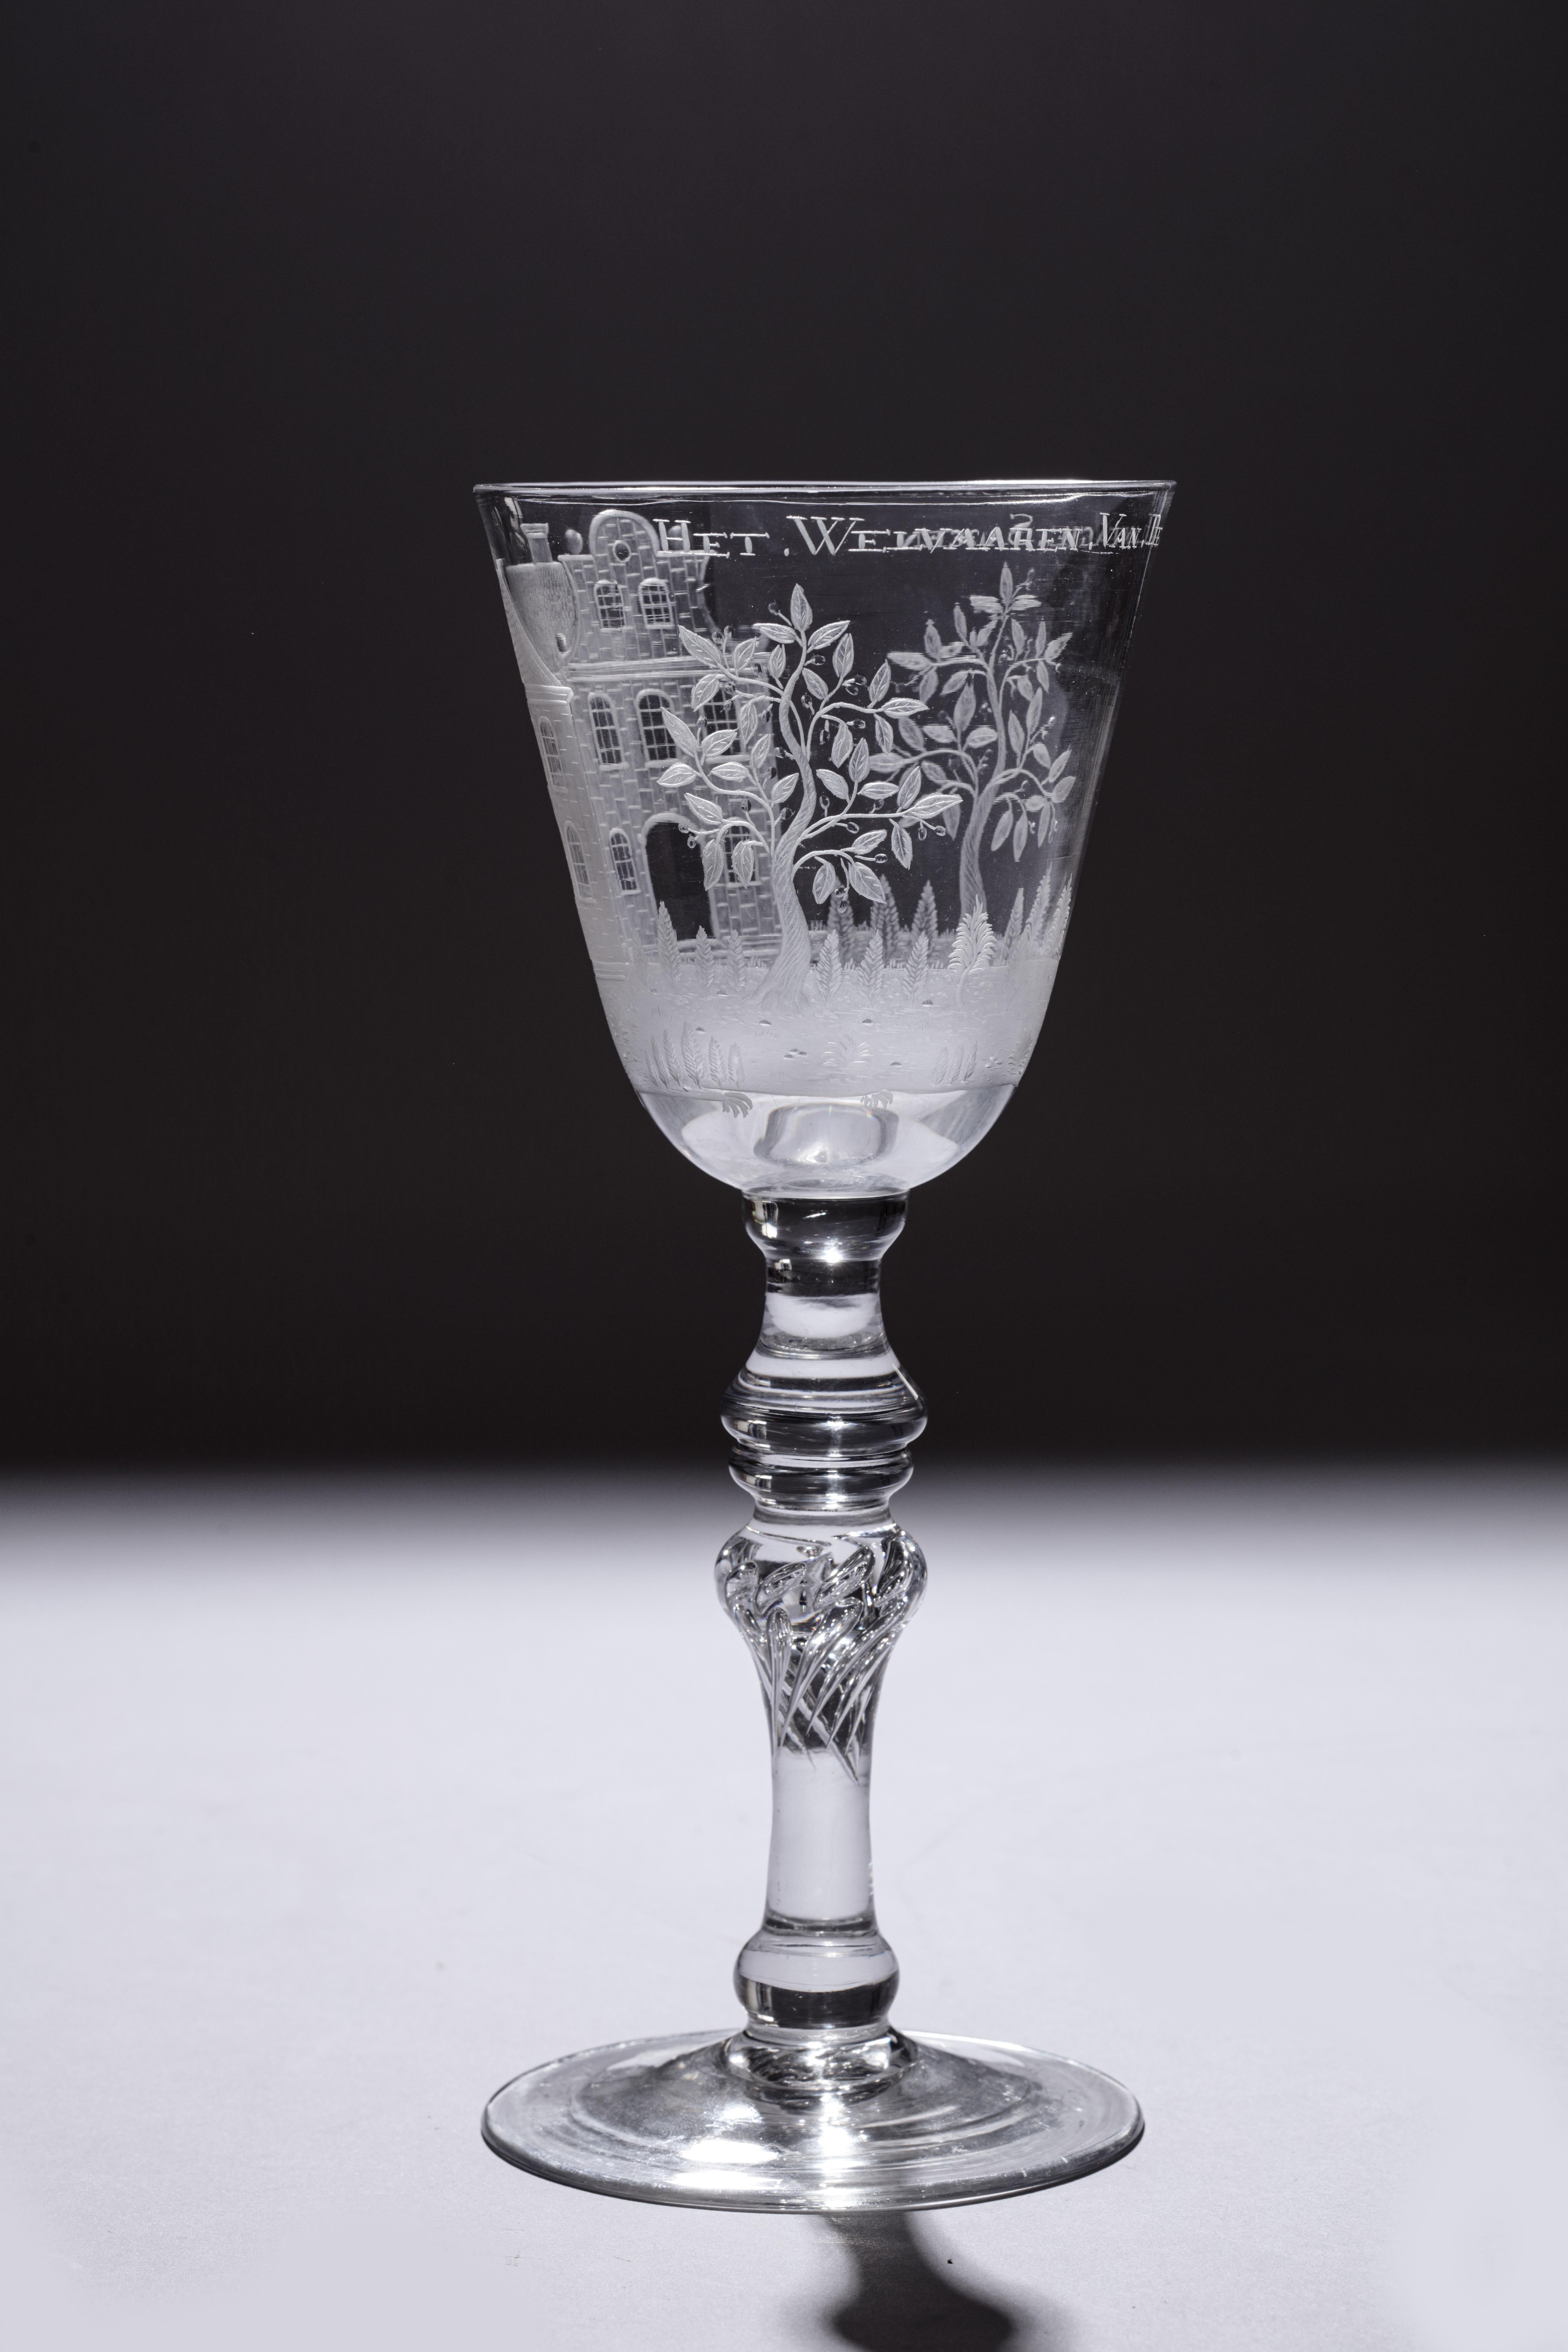 Surinamer Engraved Commemorative Surinam Plantation Glass, History of 18th Century Slavery For Sale